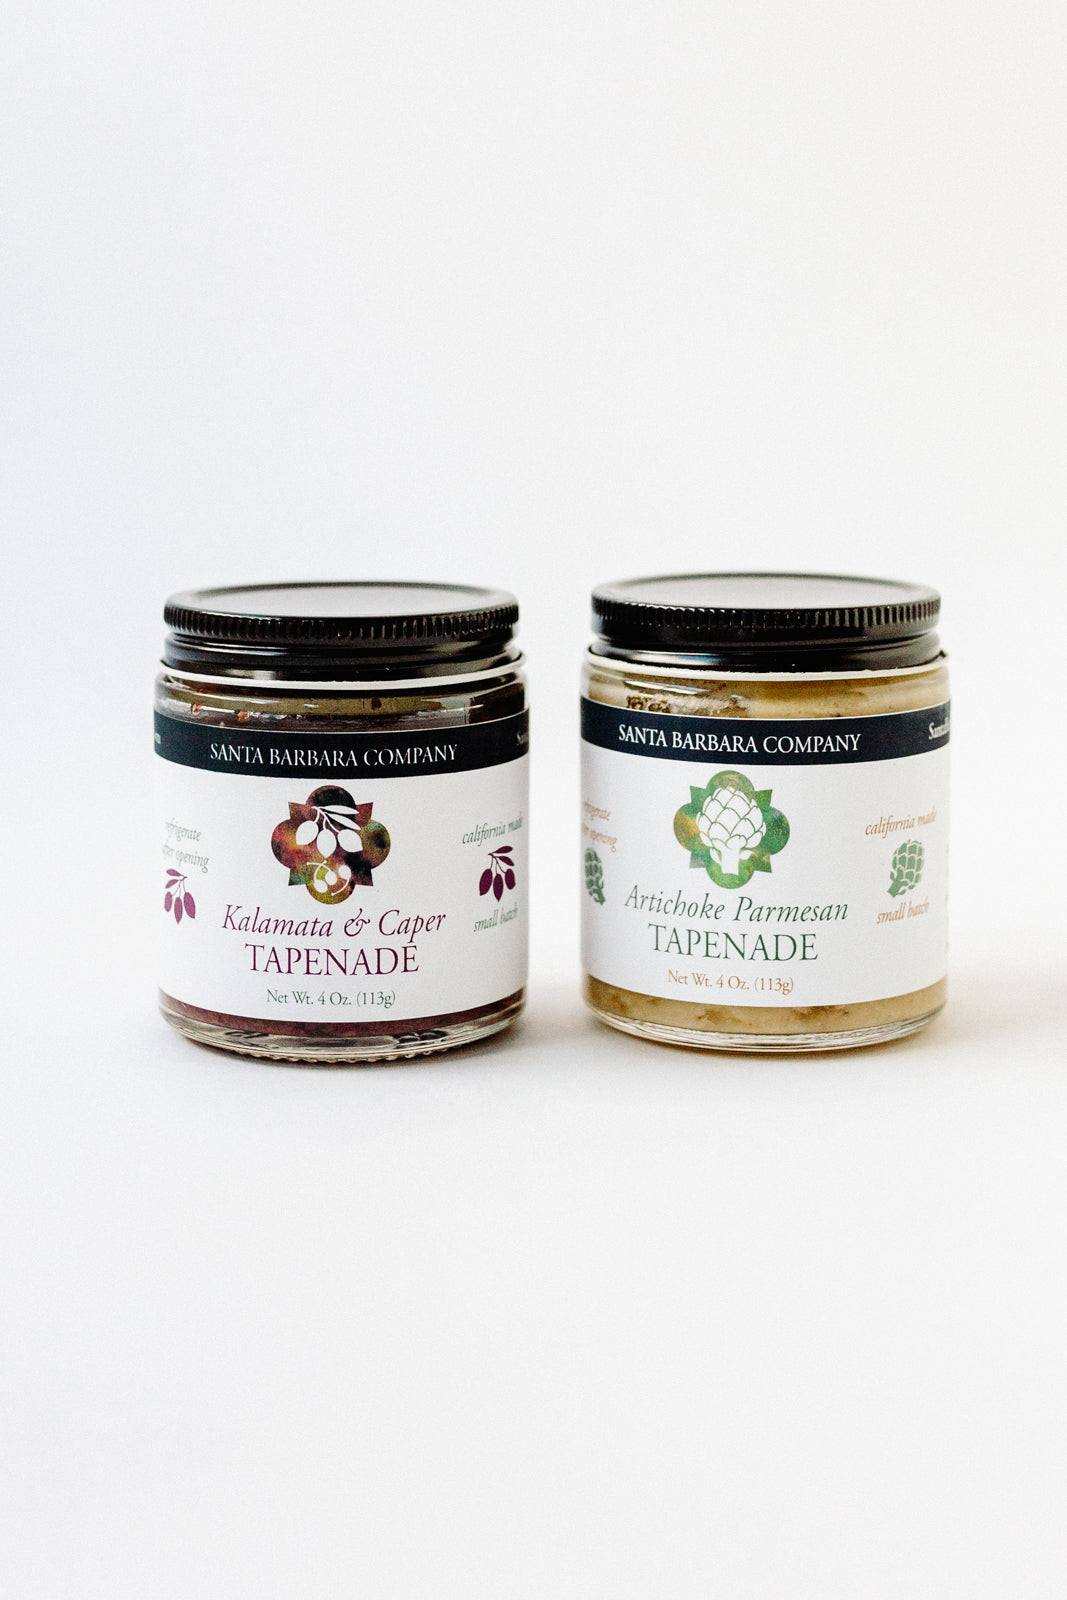 one small glass jar of artichoke parmesan tapenade and one small glass jar of olive tapenade